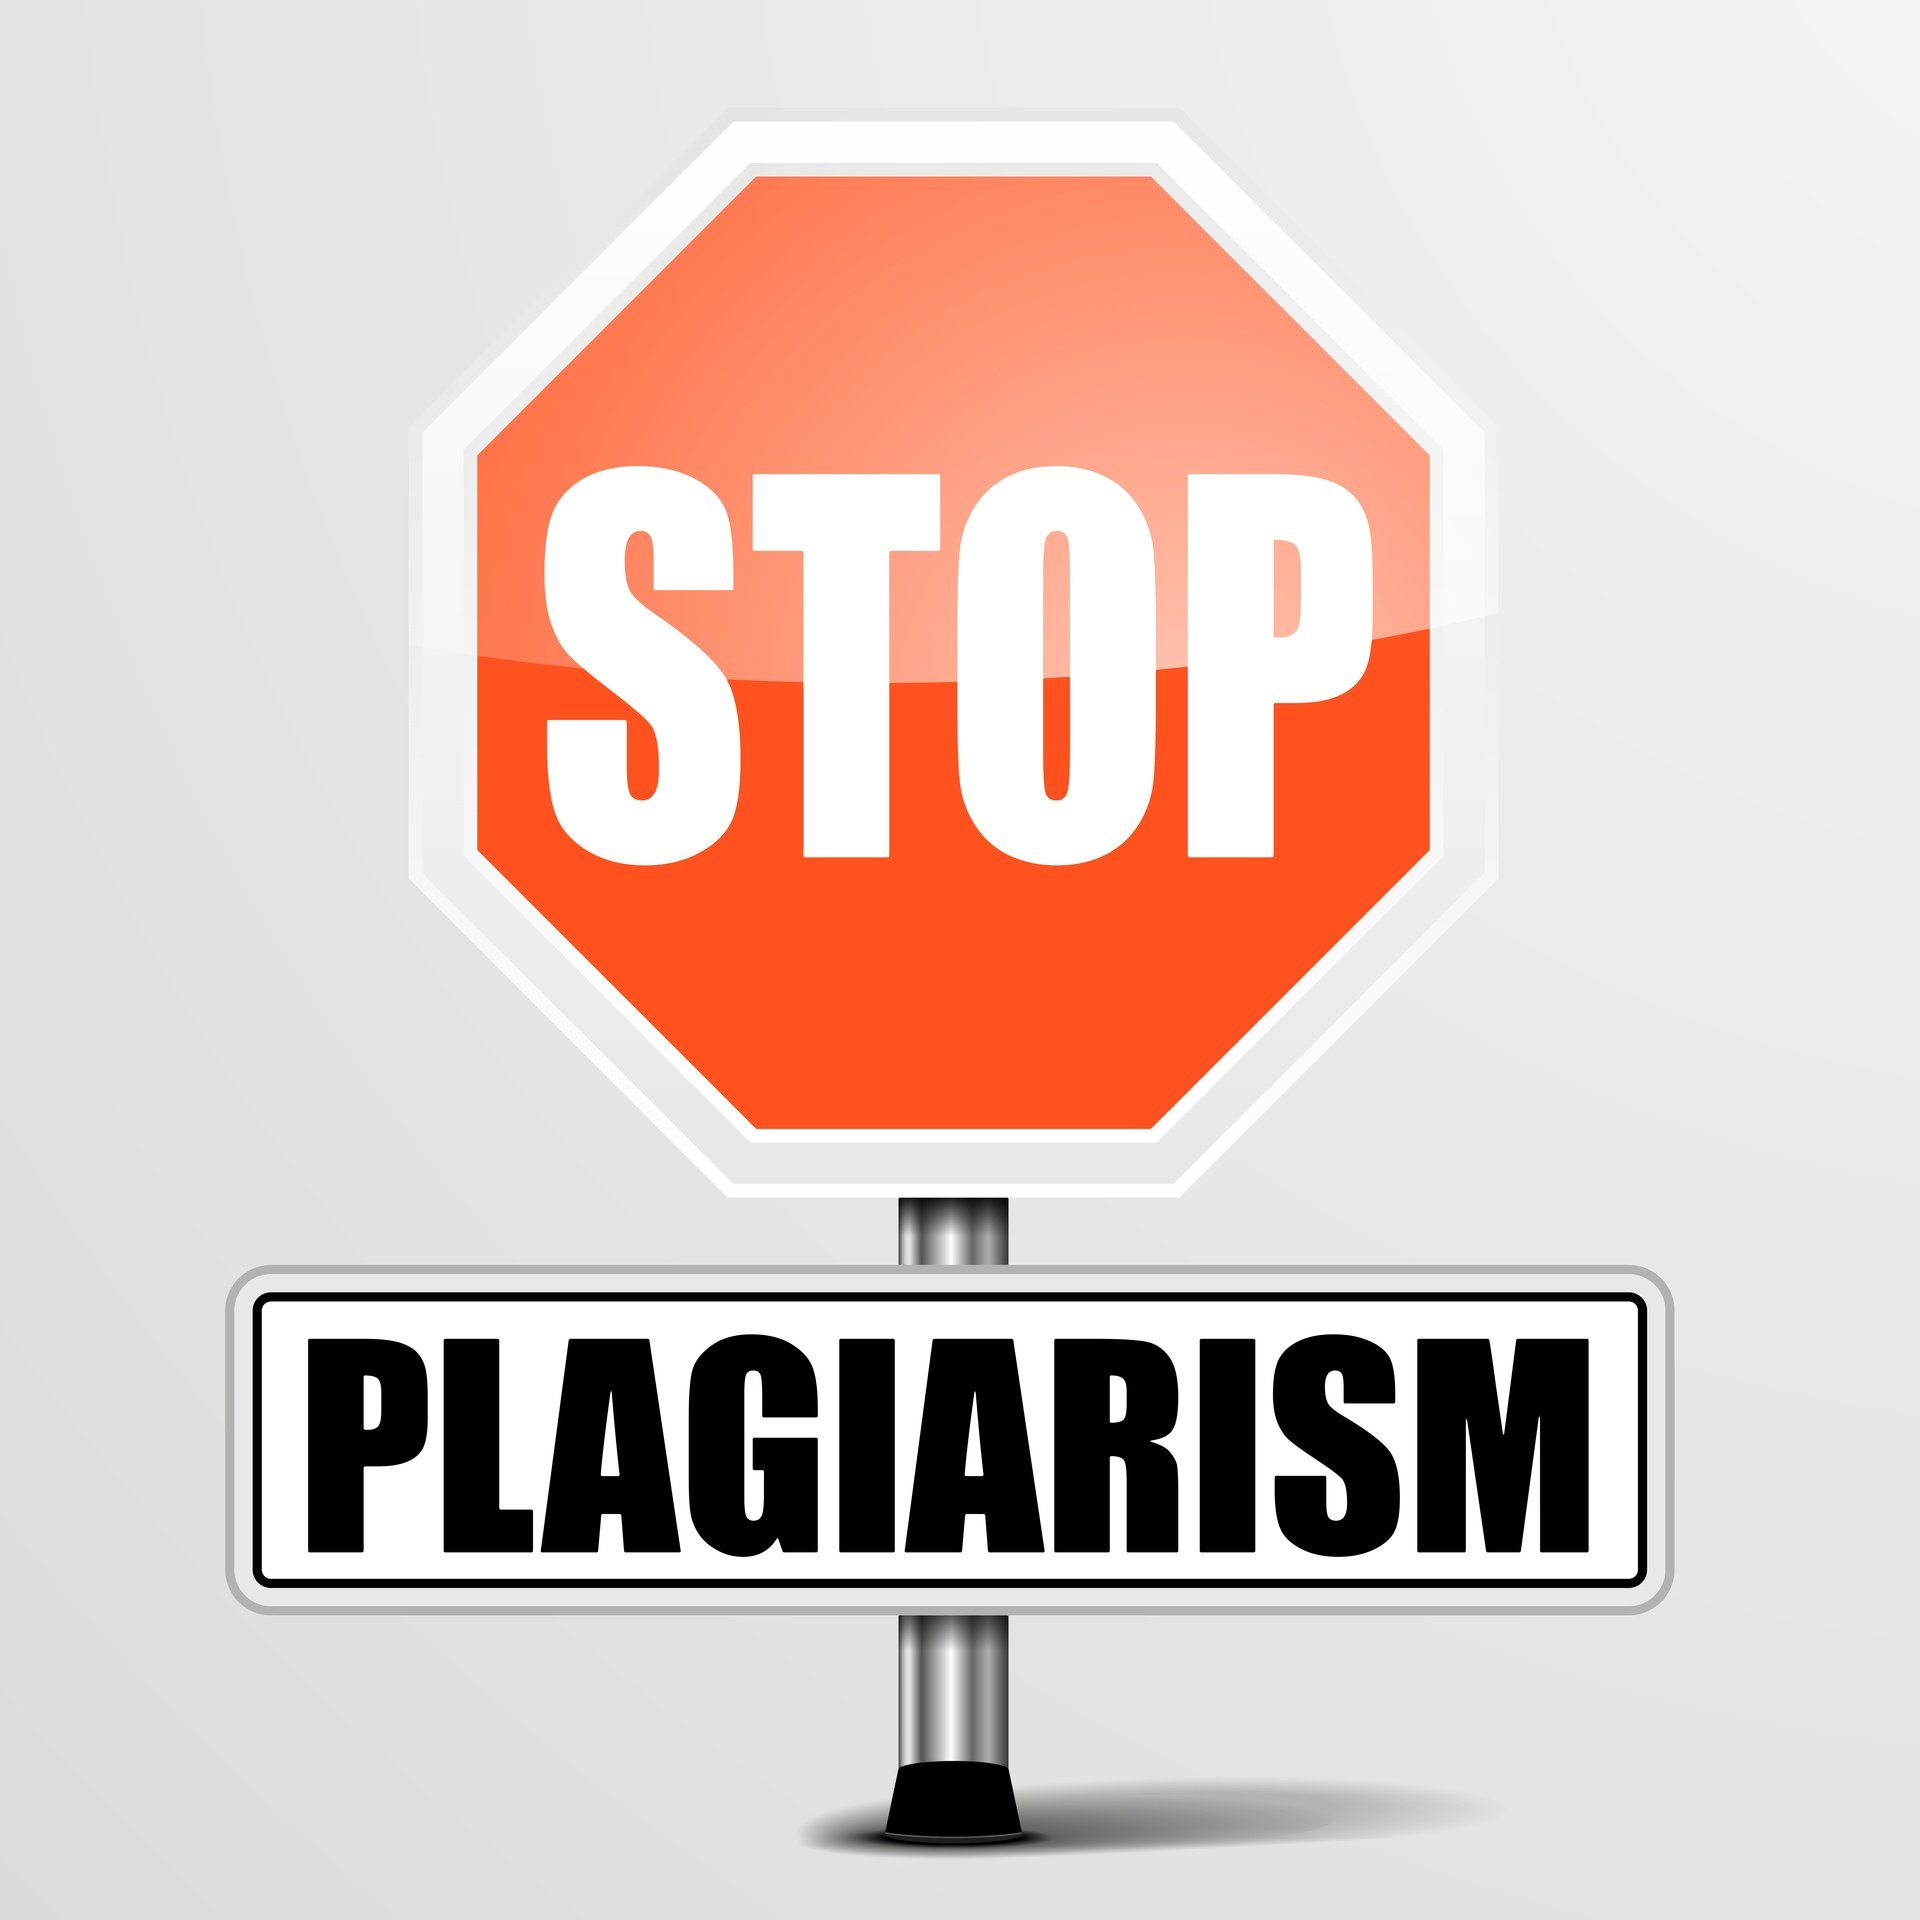 Custom papers no plagiarism